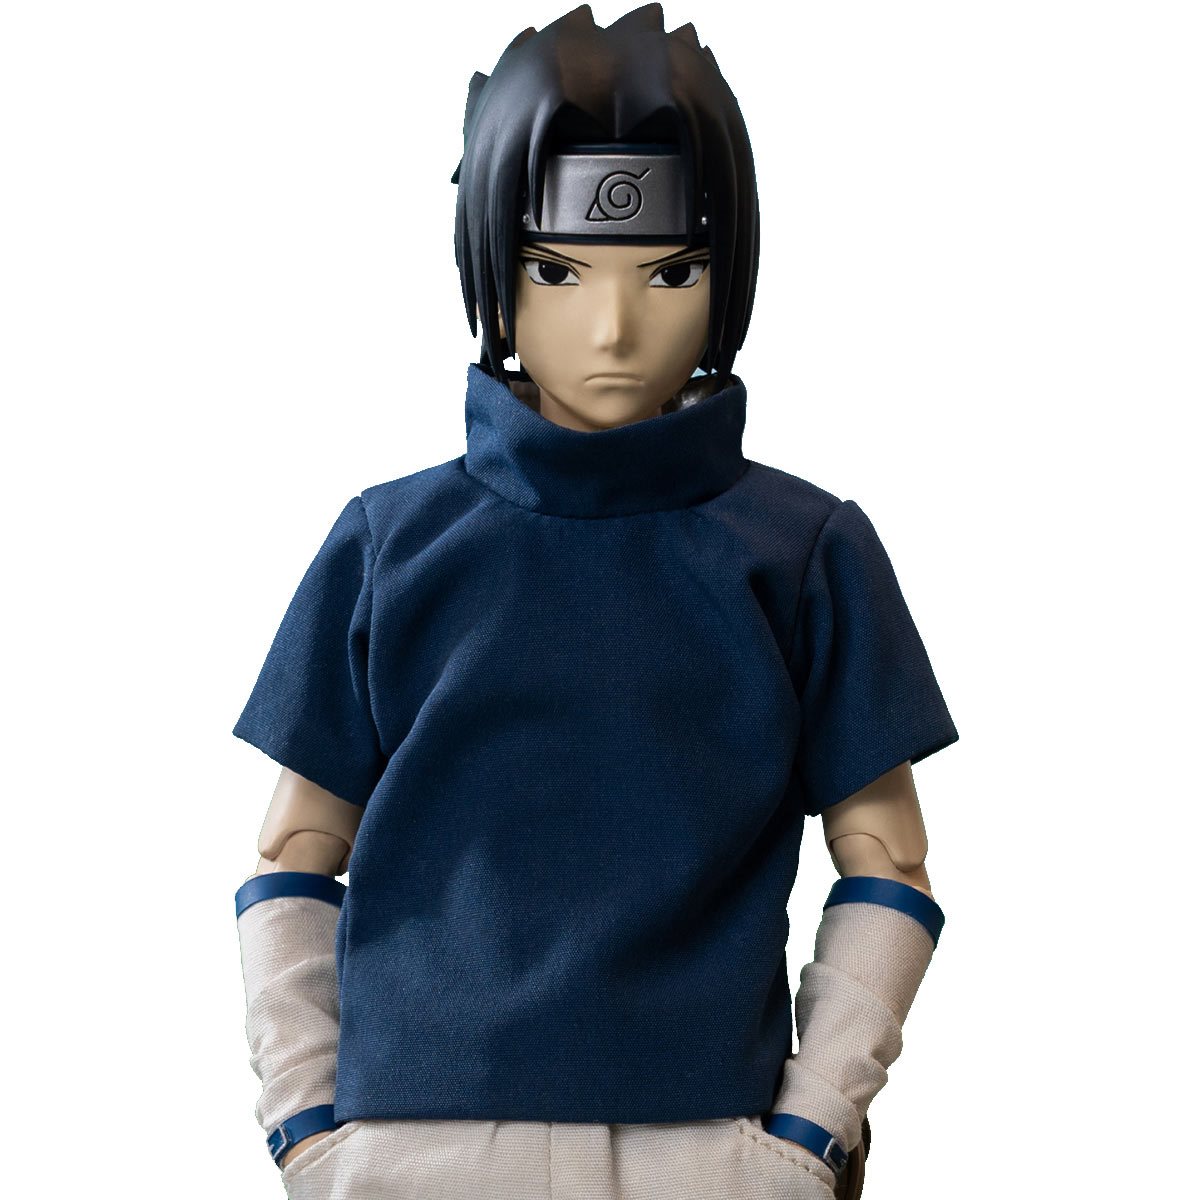 Threezero Naruto - 1/6 Scale Sasuke Uchiha Figure